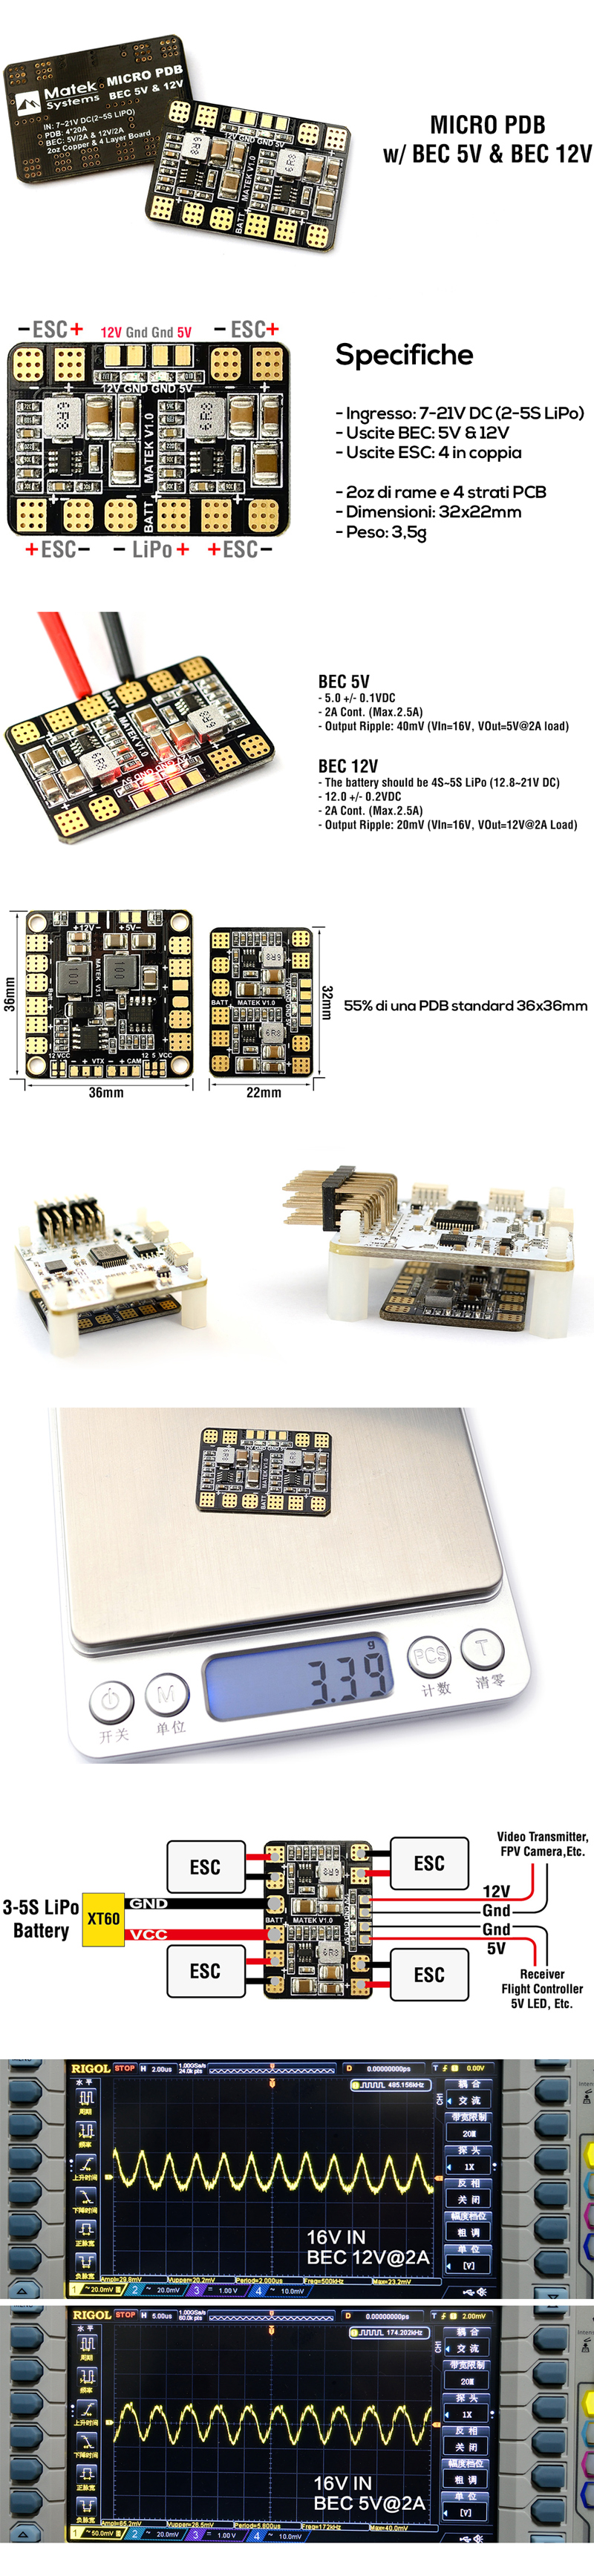 matek-micro-power-distribution-board-micro-pdb-led-and-power-hub-costruzione-droni-fpv